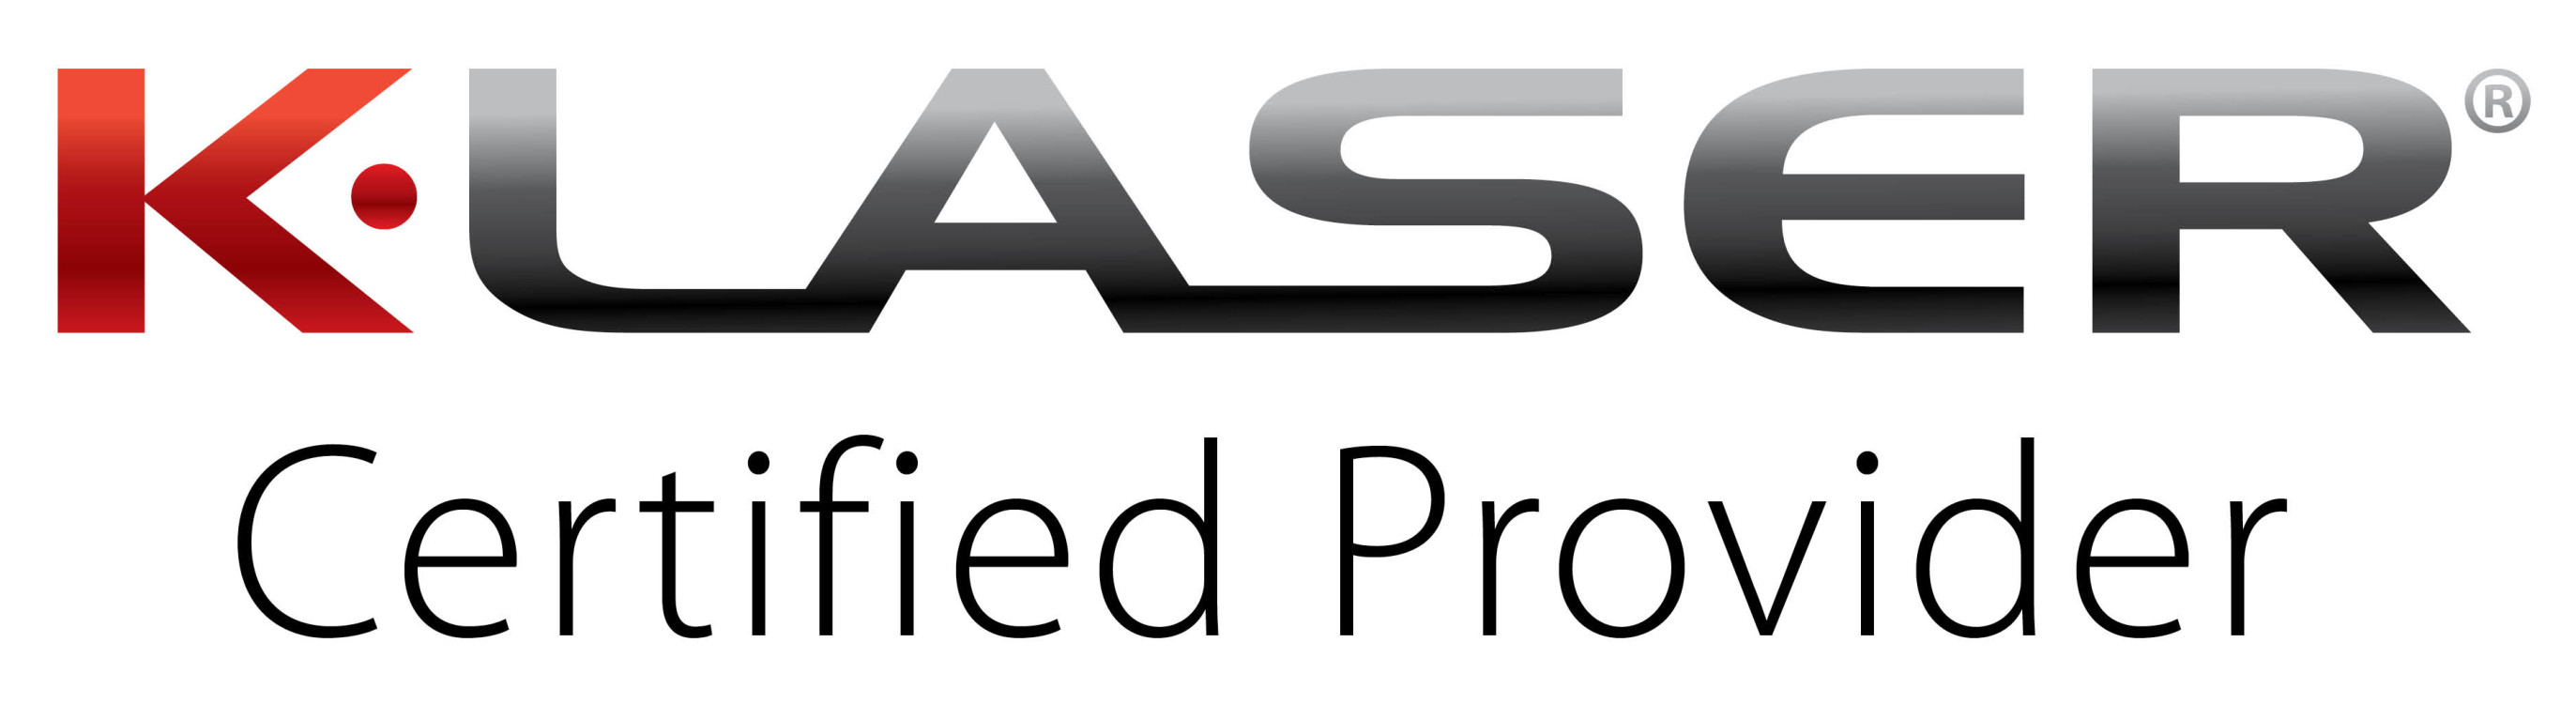 K-Laser_Certified Provider